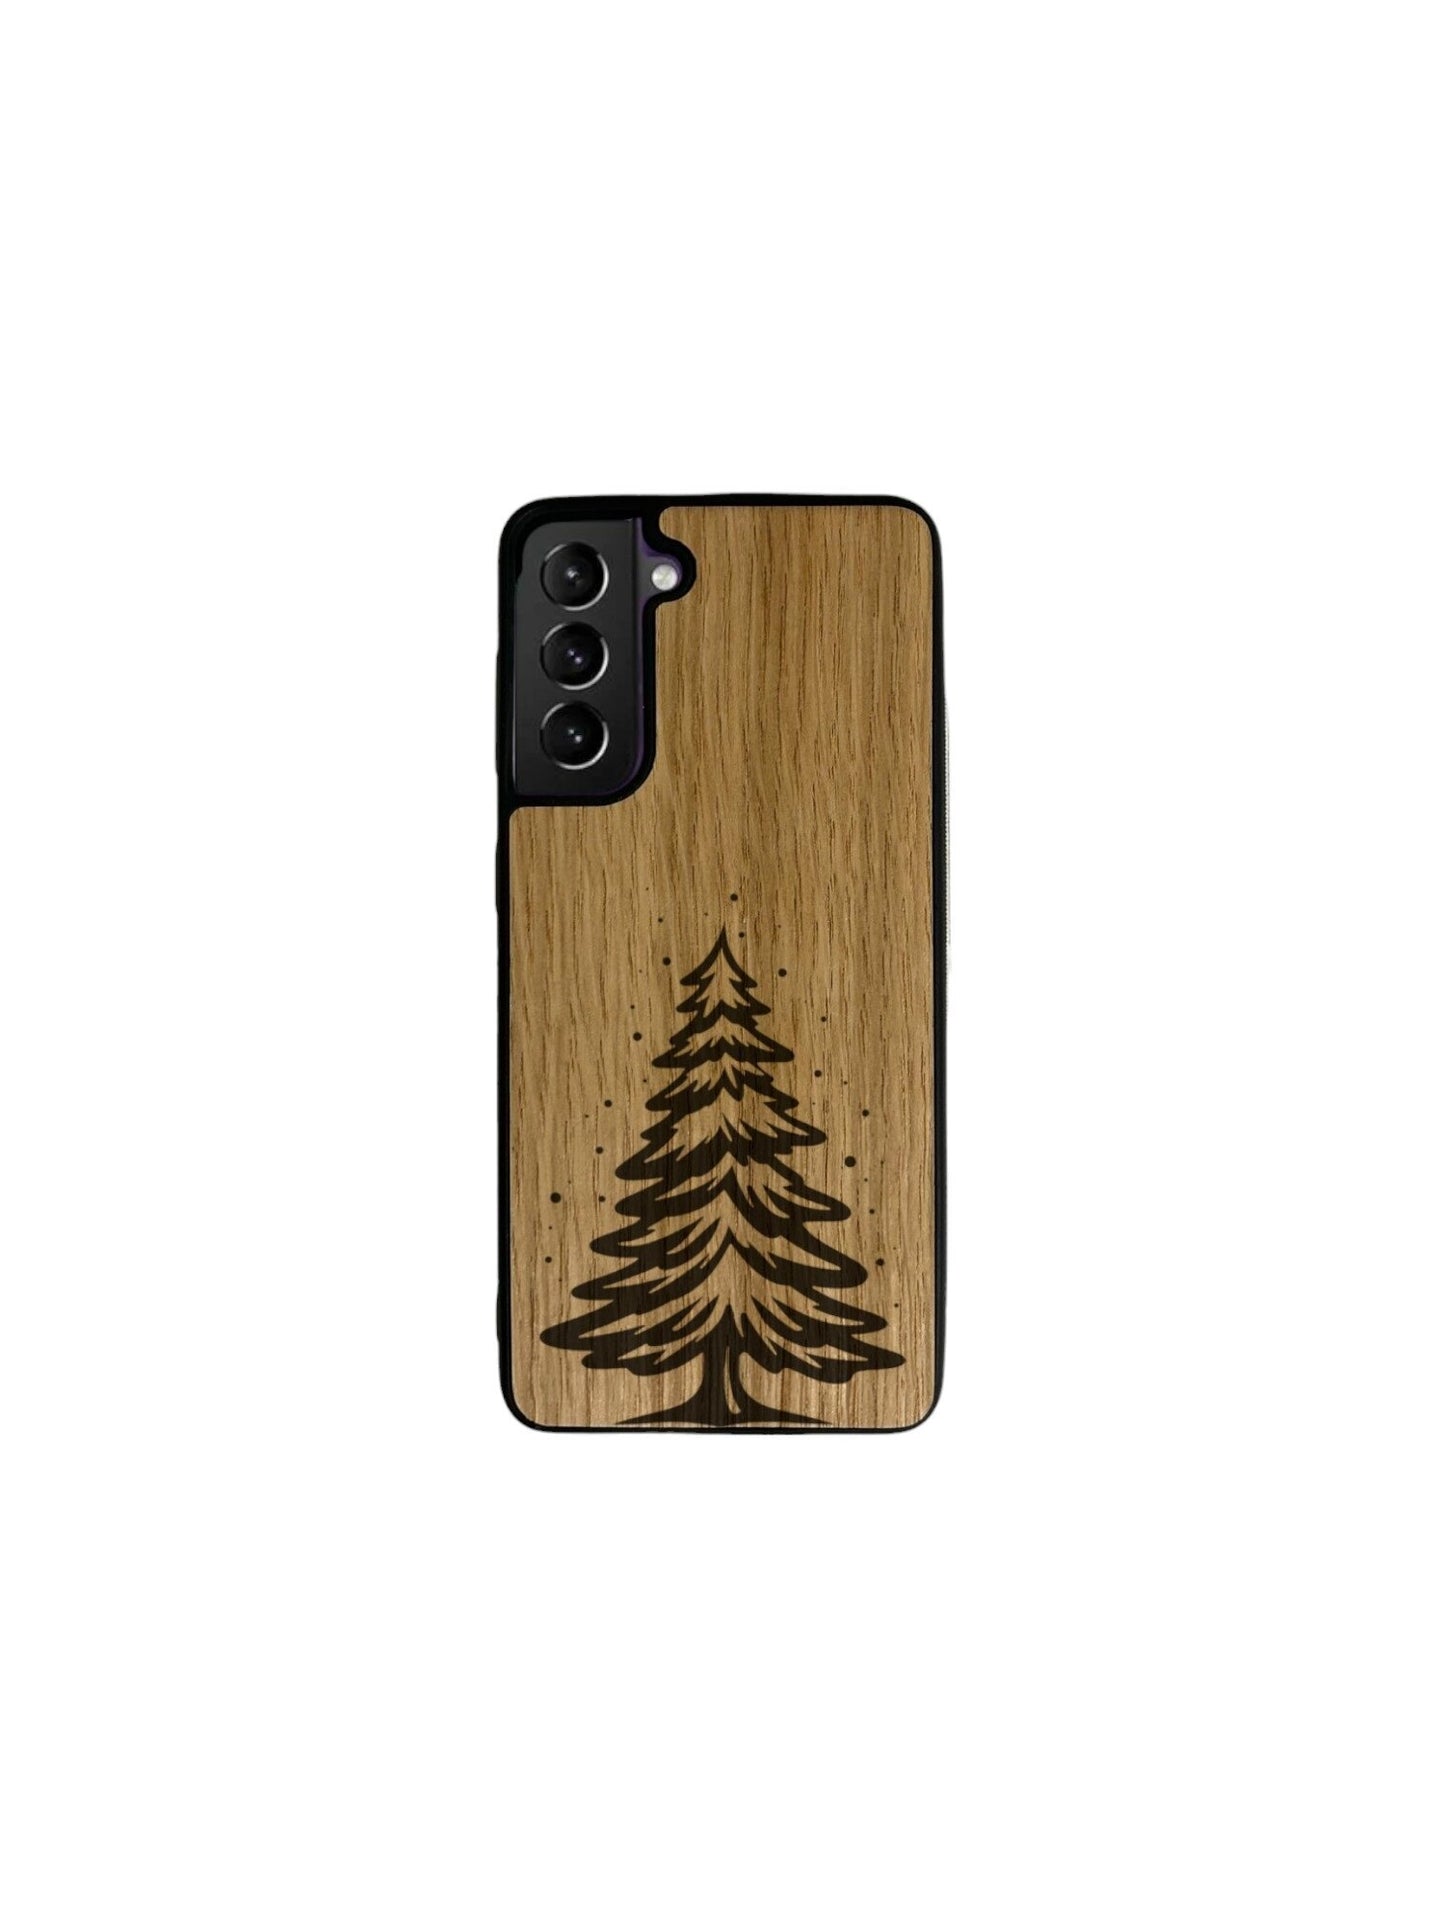 Samsung Galaxy S case - Christmas tree